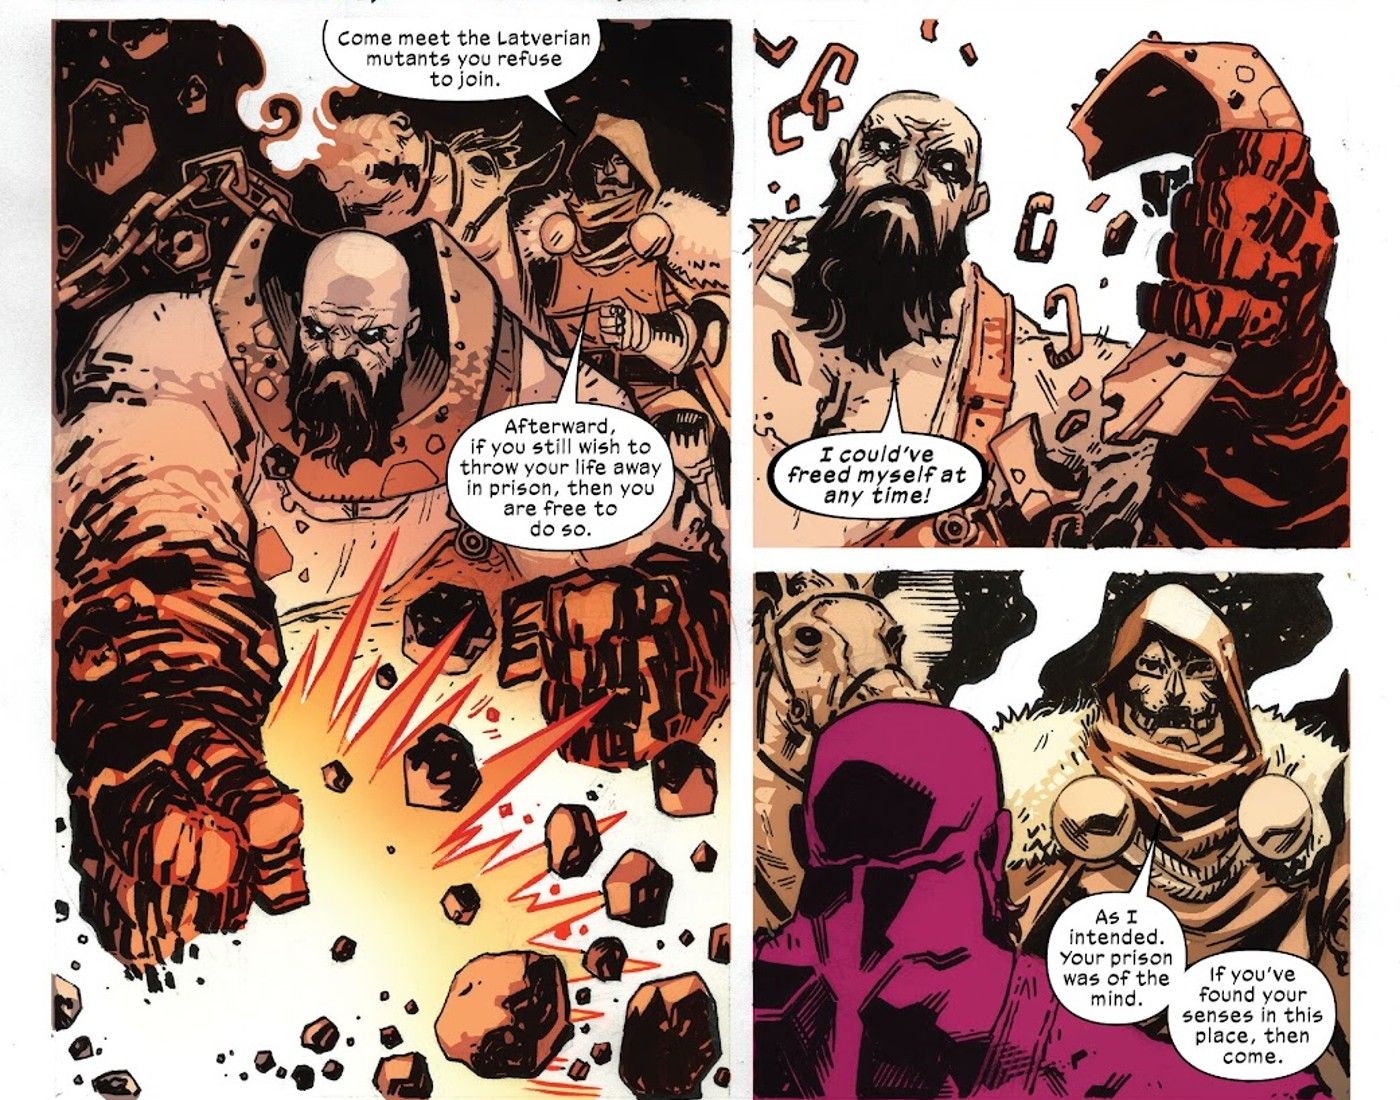 X-Men #29, Doctor Doom recruits Slag for his X-Men